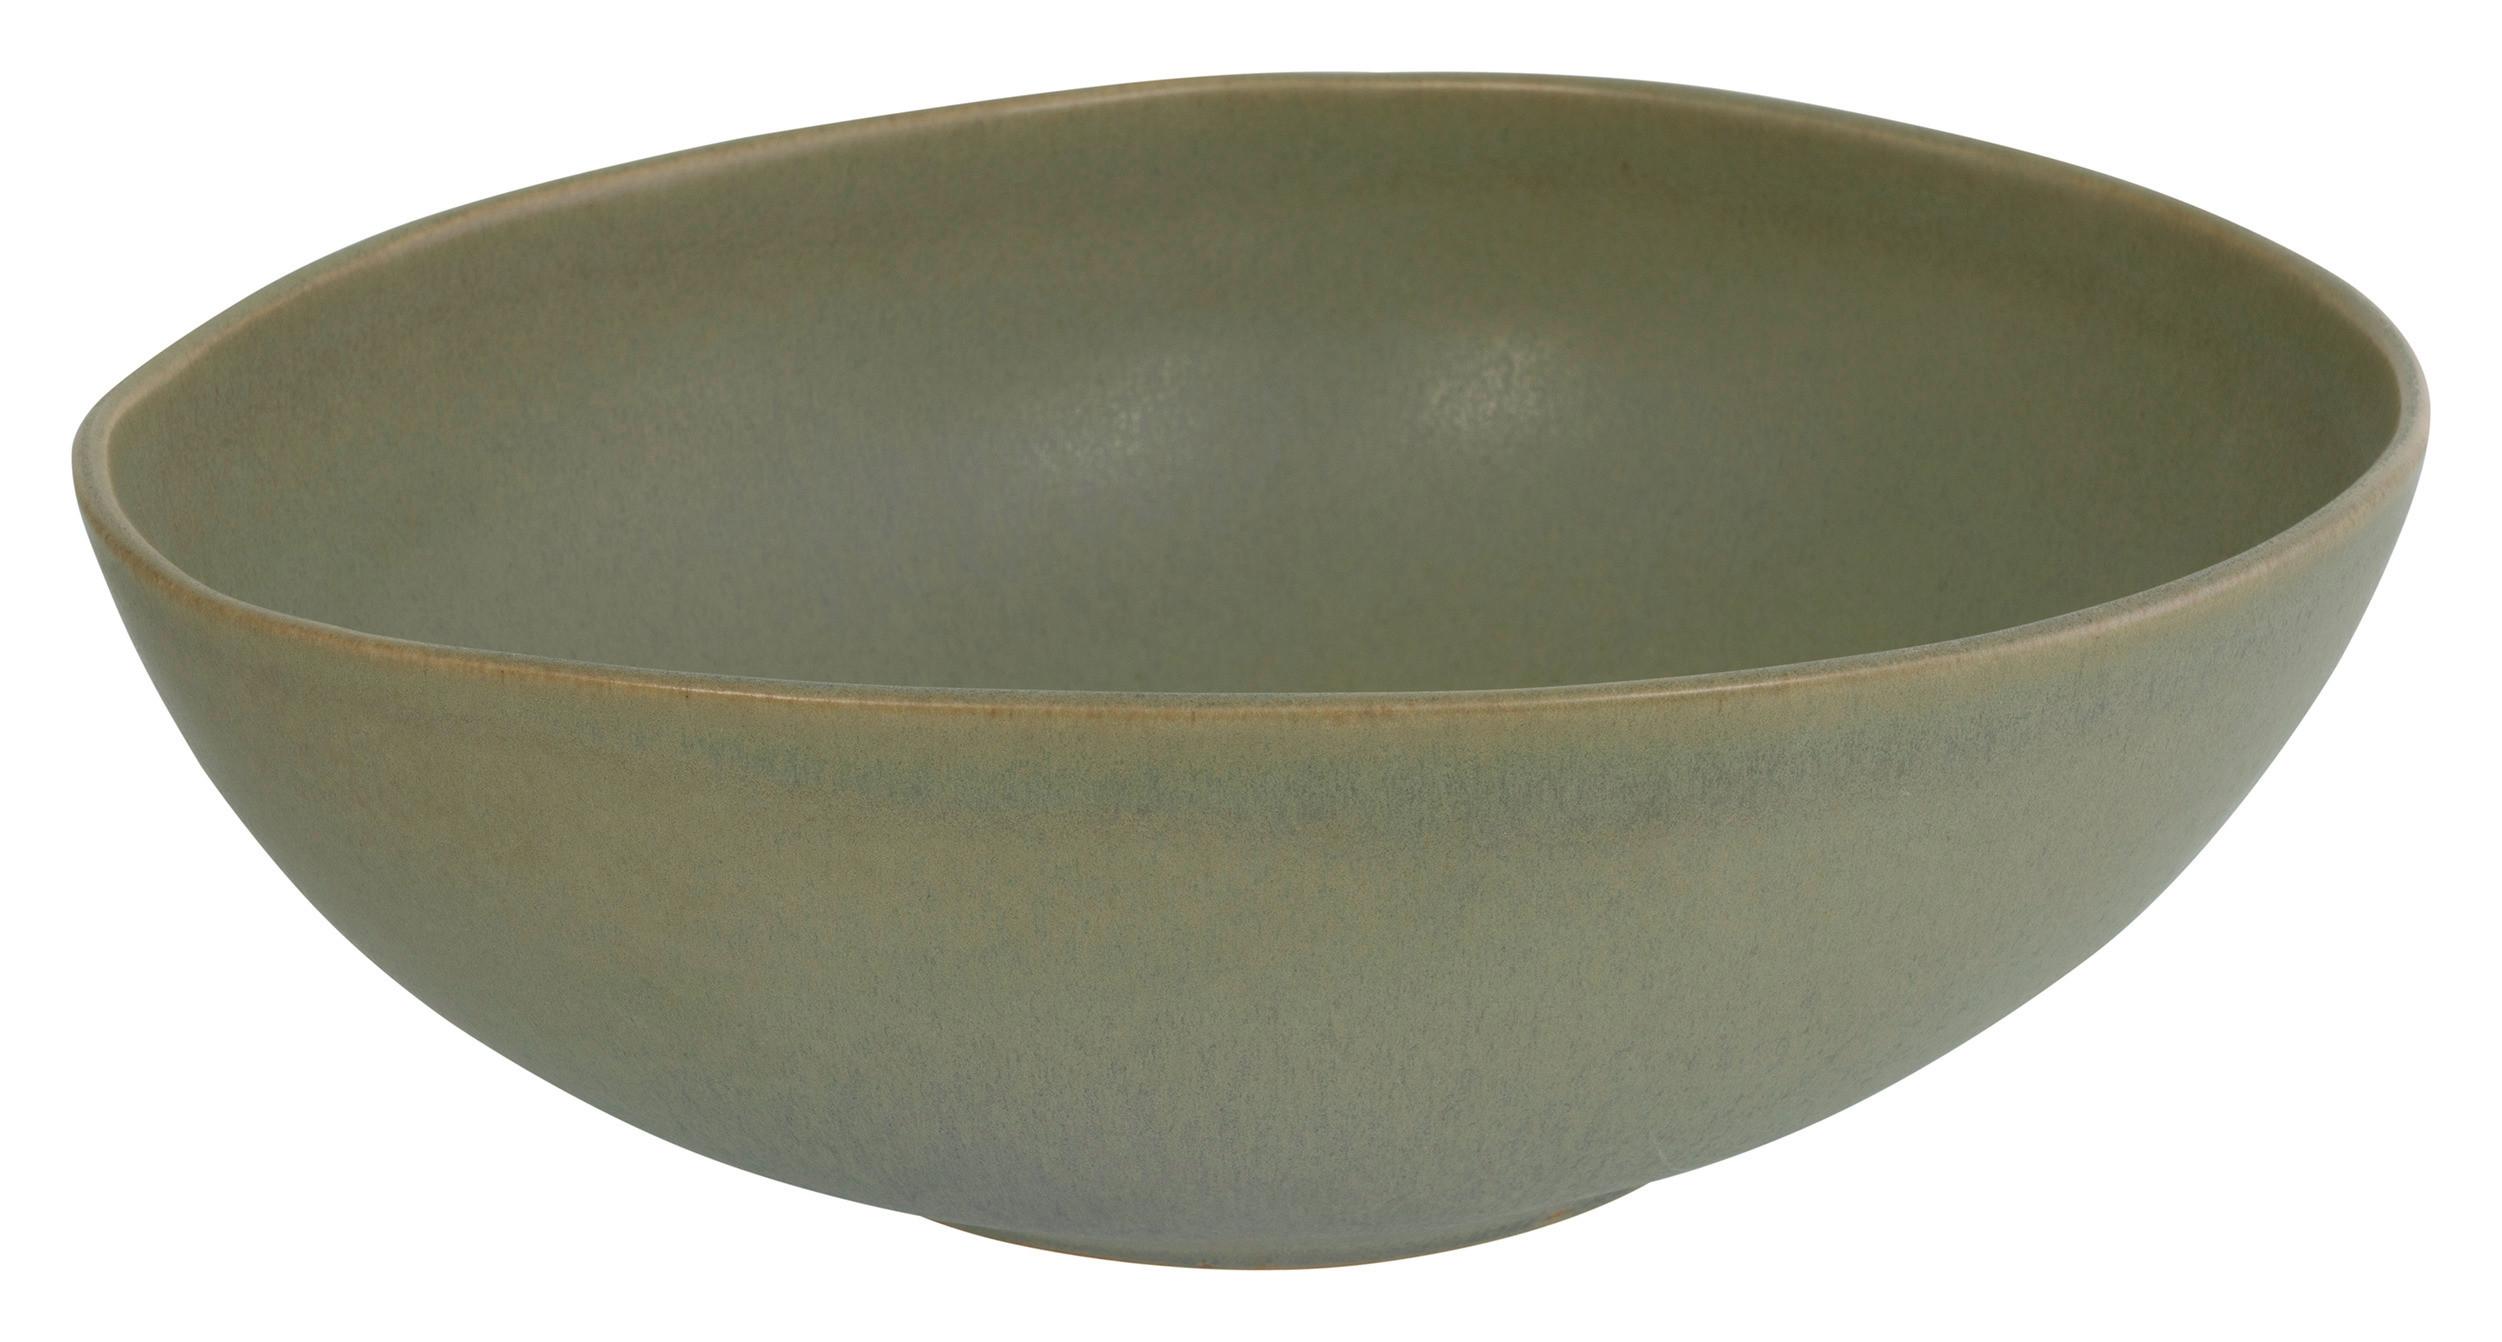 Hluboký Talíř Gourmet - tmavě zelená, Moderní, keramika (20,5/16,5/5,2cm) - Premium Living